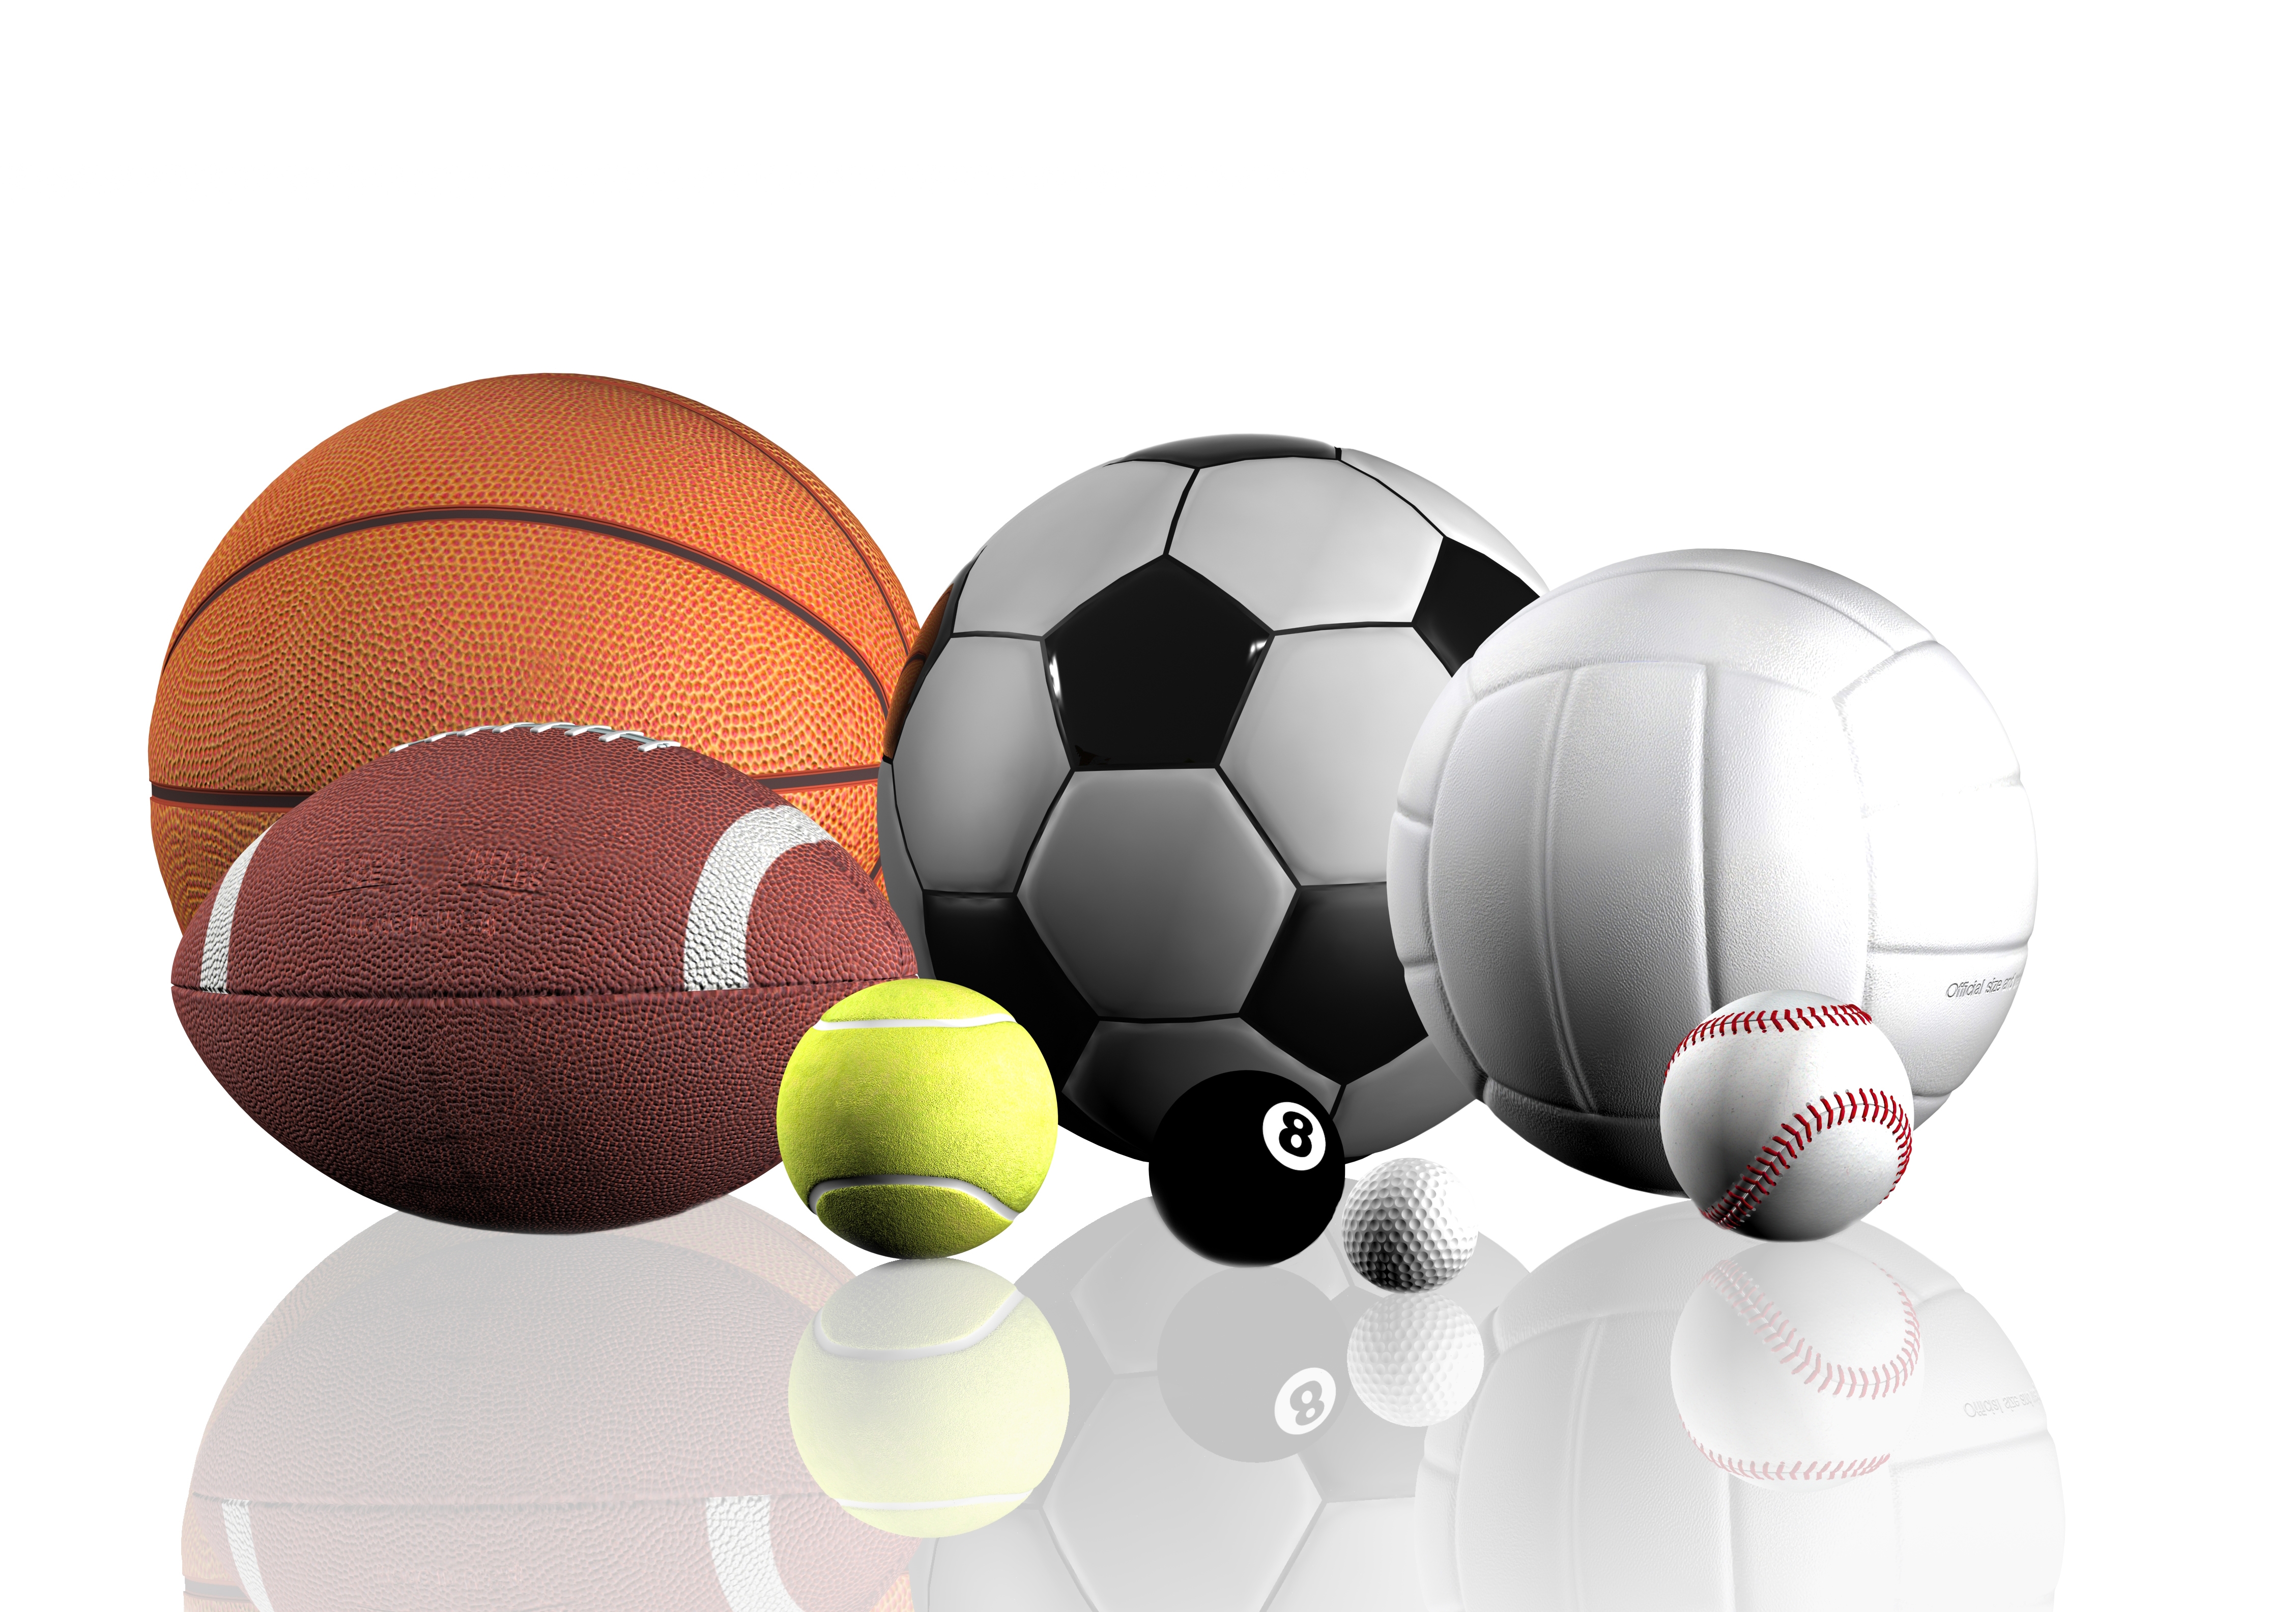 Stock Photos Of Sports Balls Image Photography